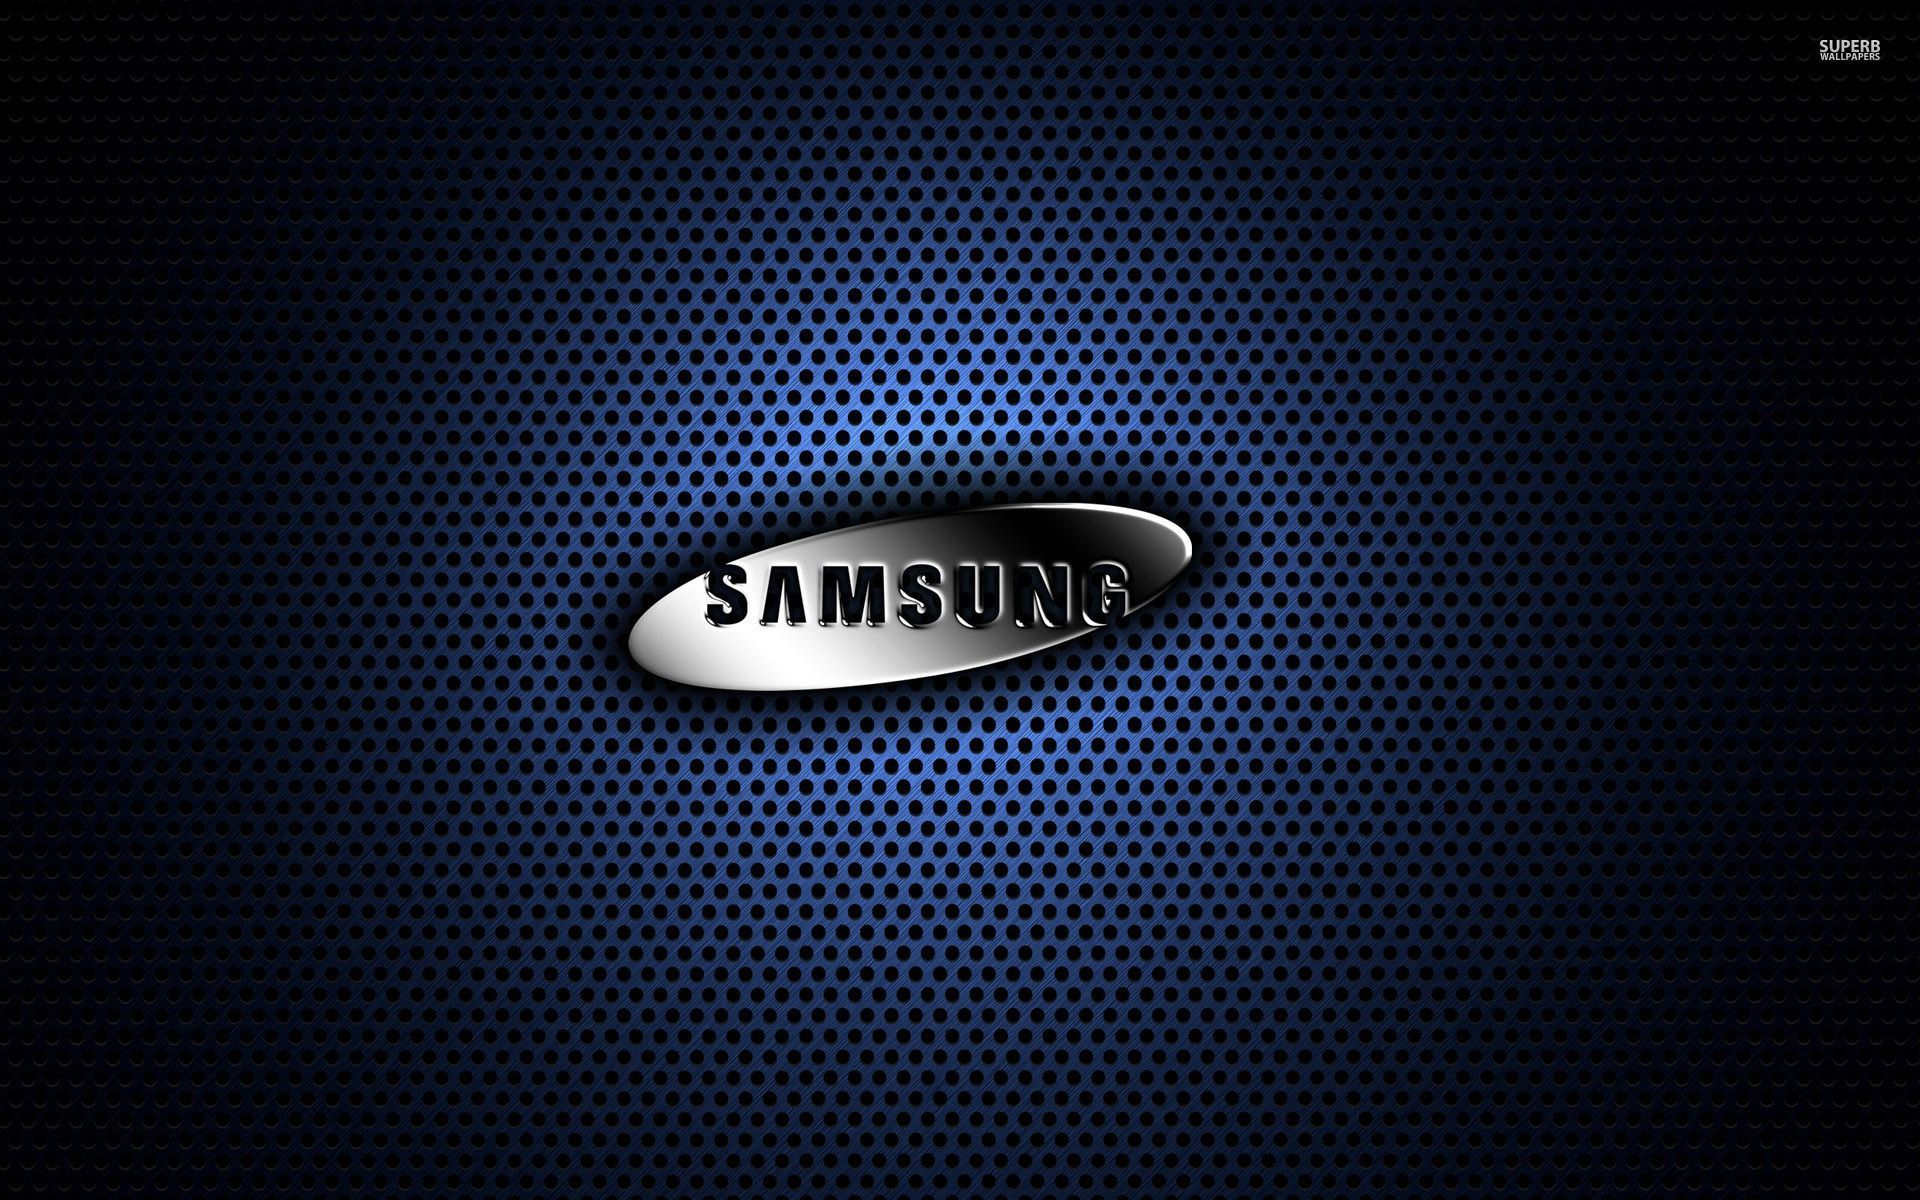 Samsung wallpaper - Computer wallpapers - #27649